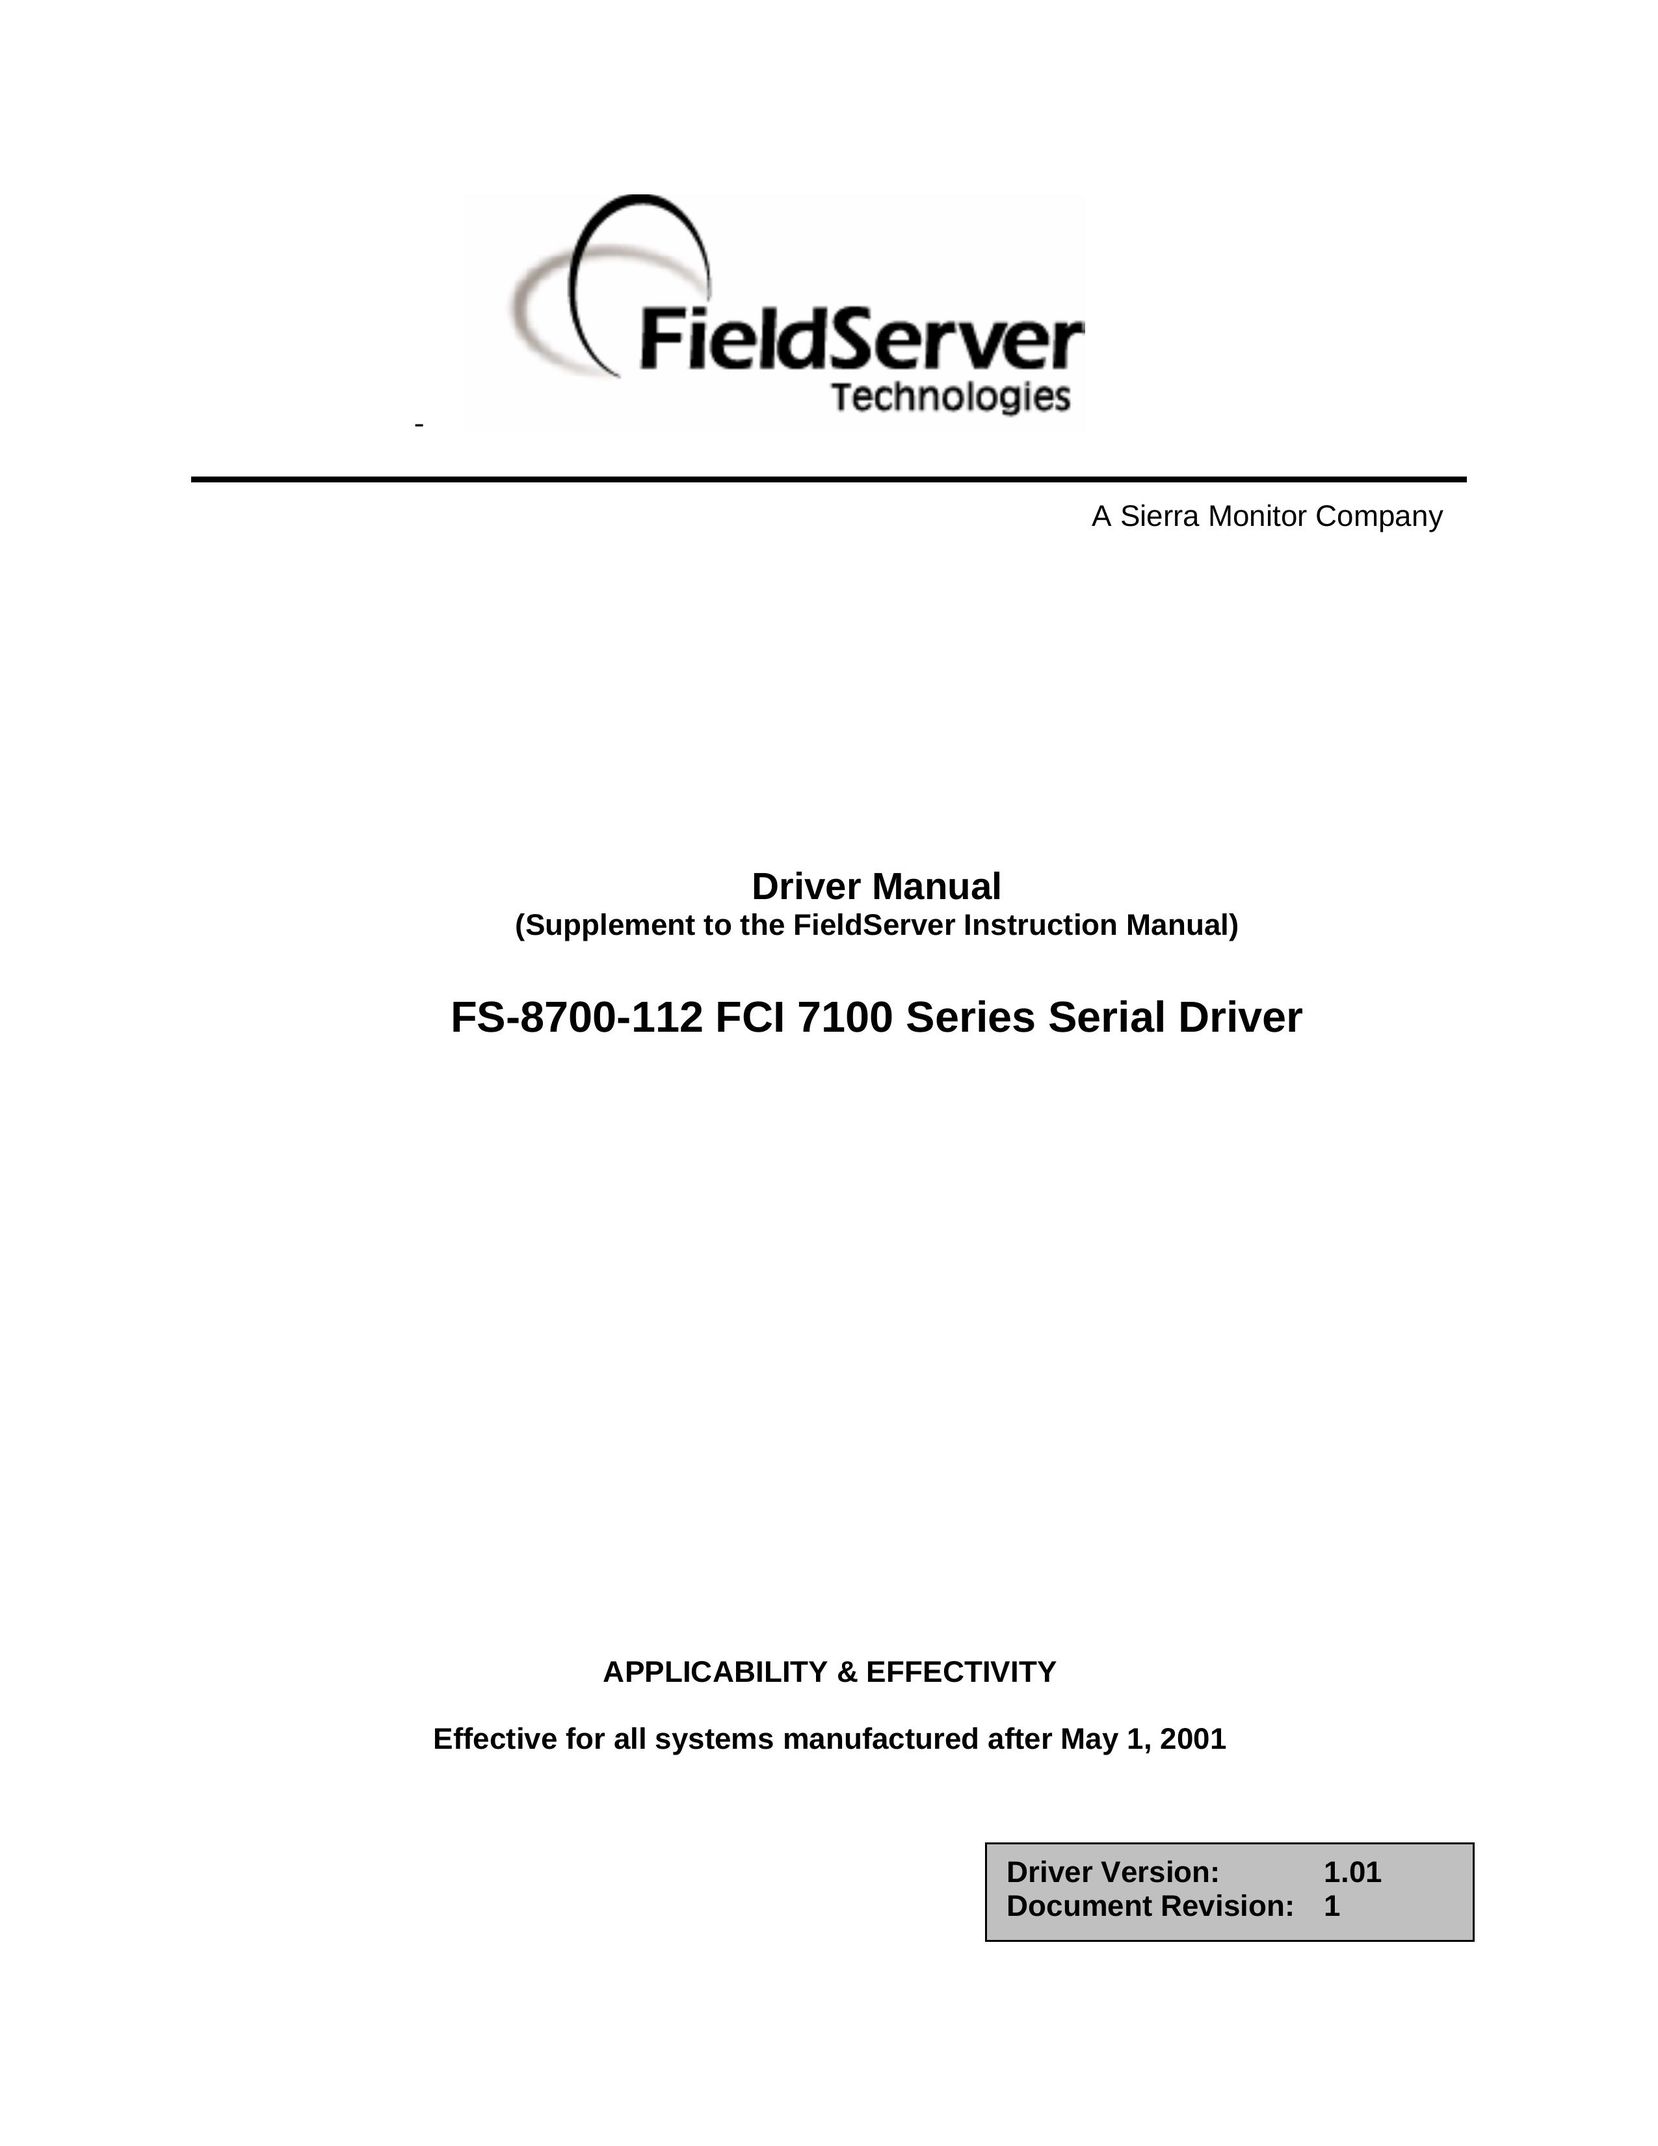 FieldServer FCI 7100 Series Computer Drive User Manual